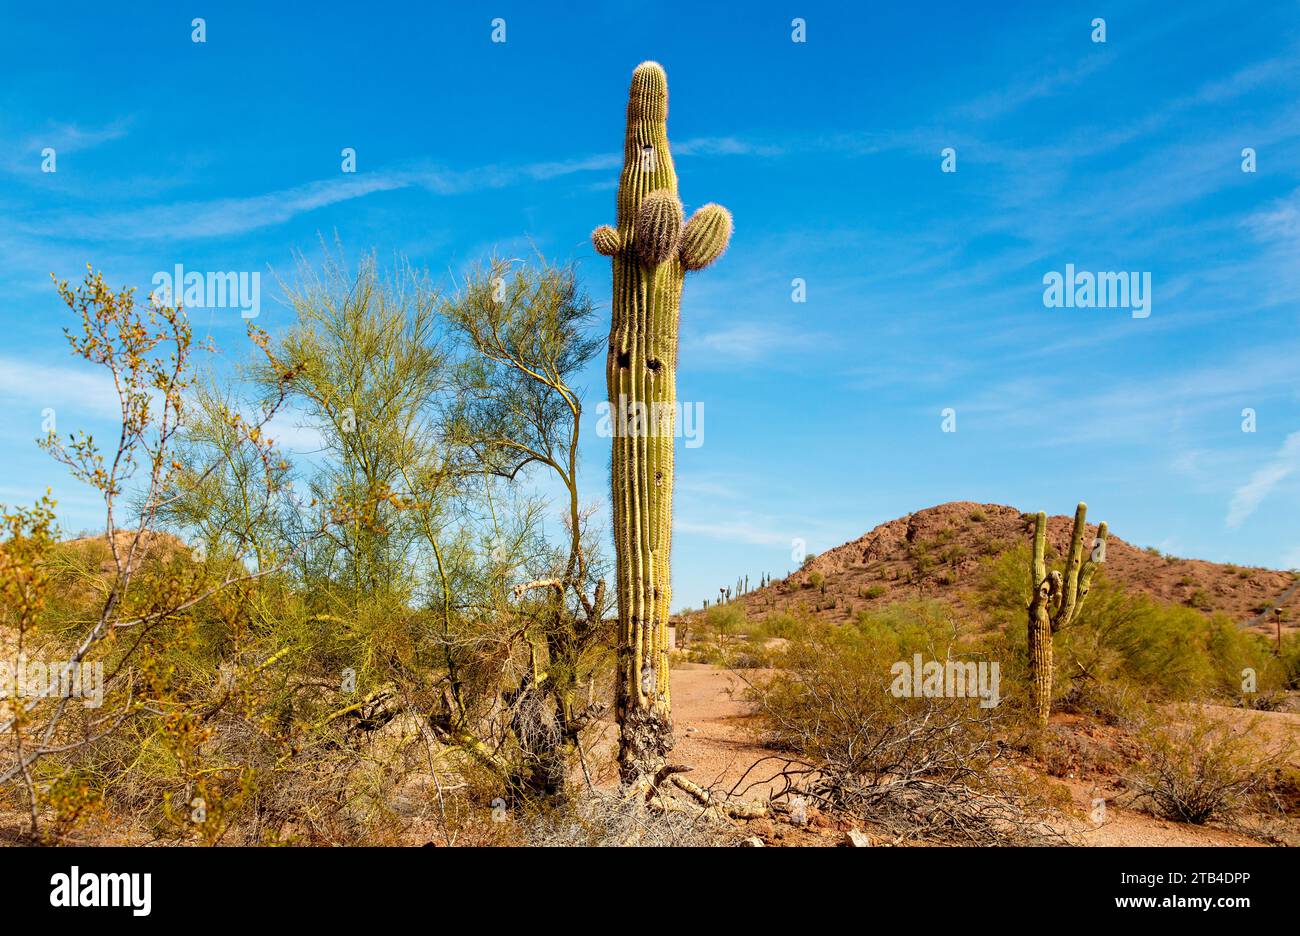 Saguaro Cactus in the Sonoran Desert, near Phoenix, Arizona, USA Stock Photo